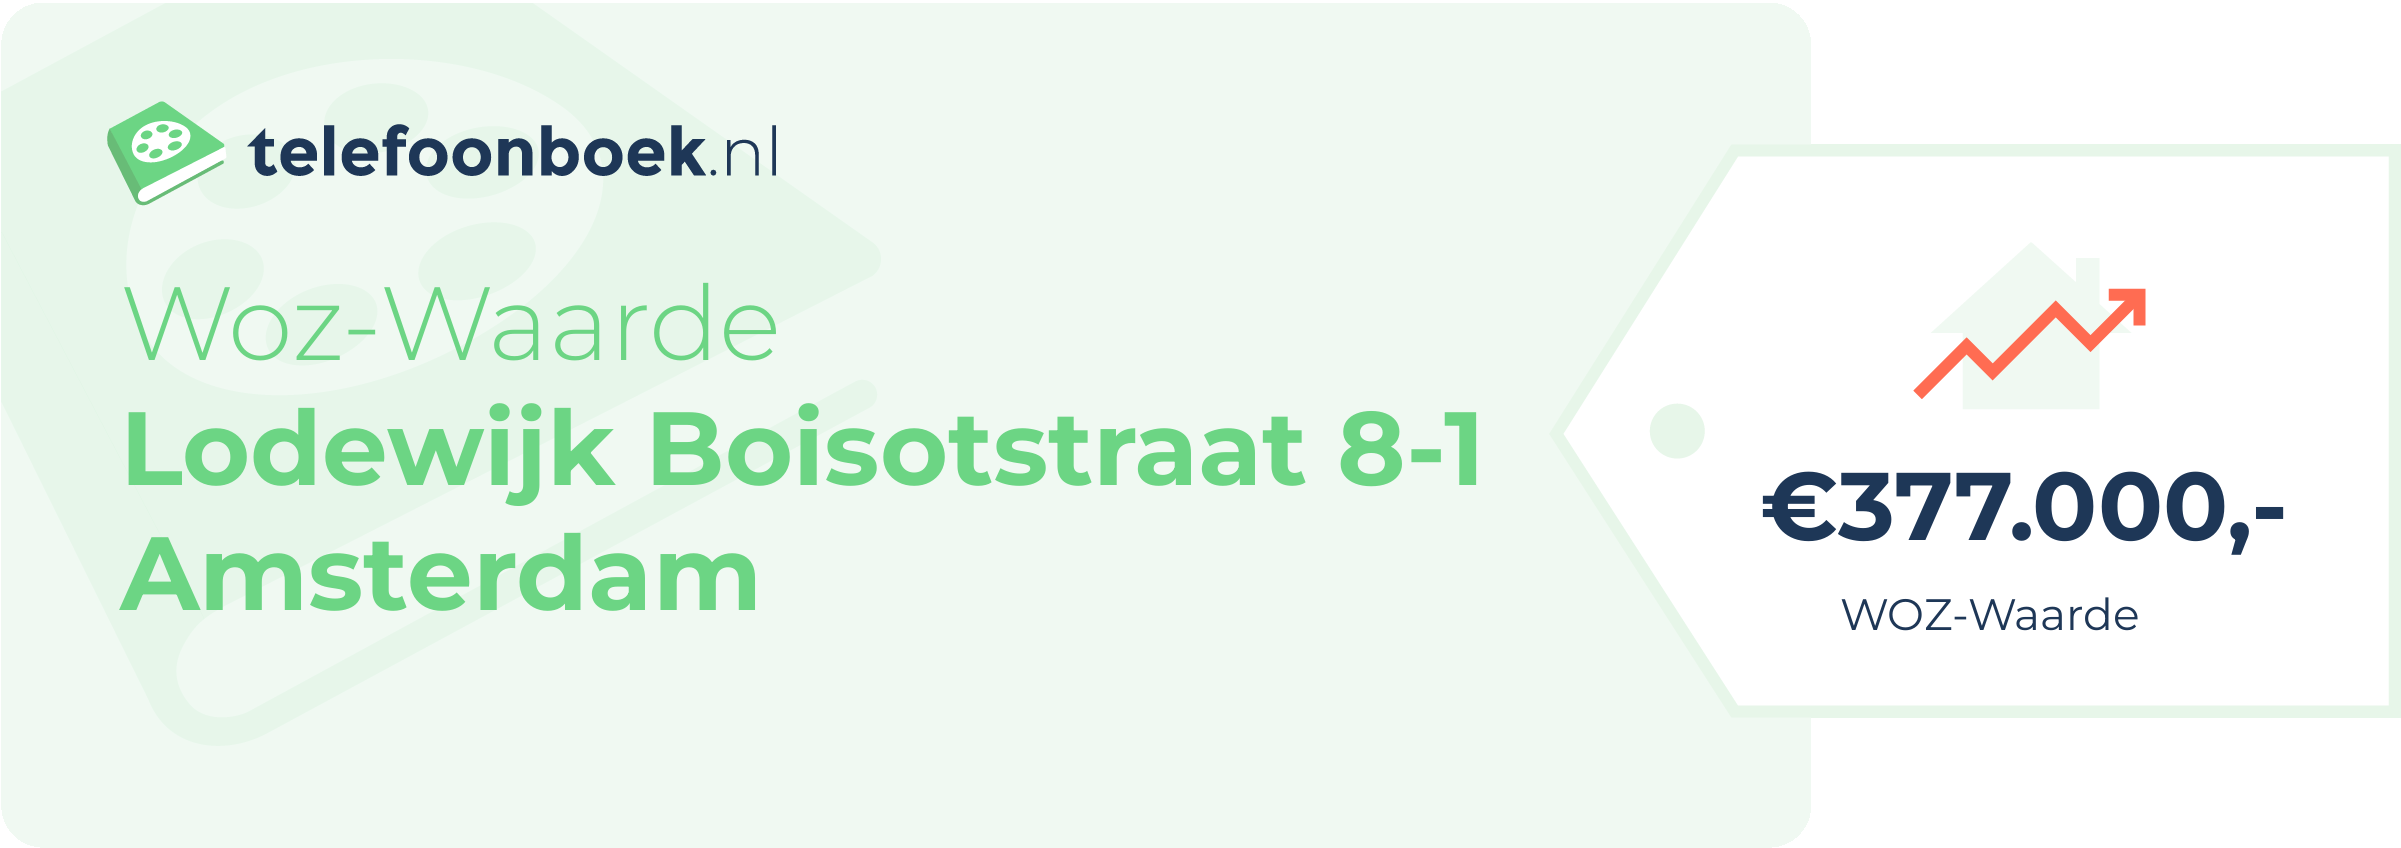 WOZ-waarde Lodewijk Boisotstraat 8-1 Amsterdam